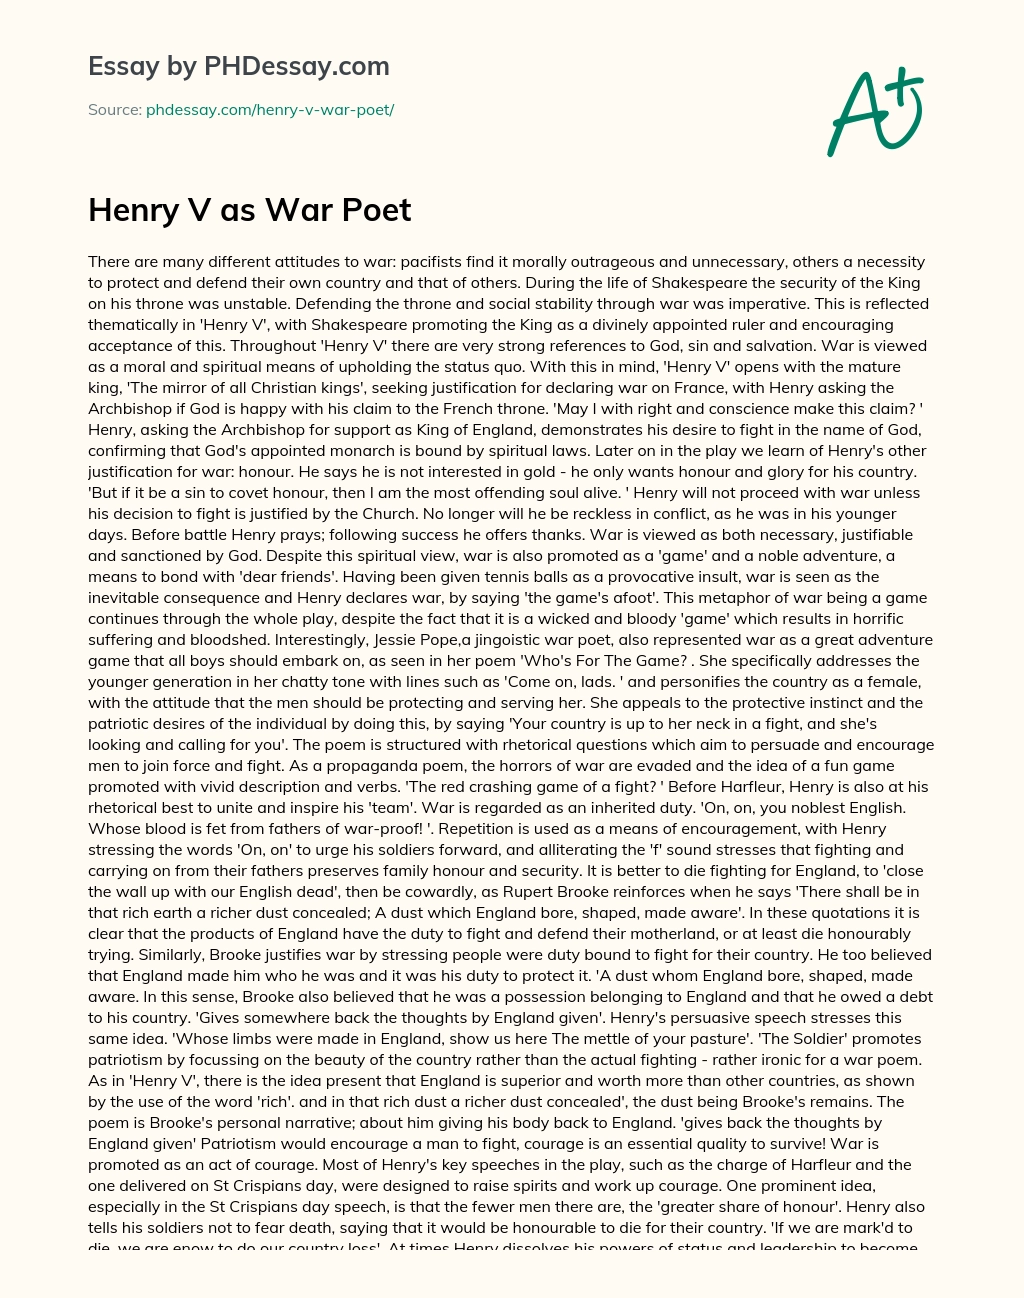 Henry V as War Poet essay